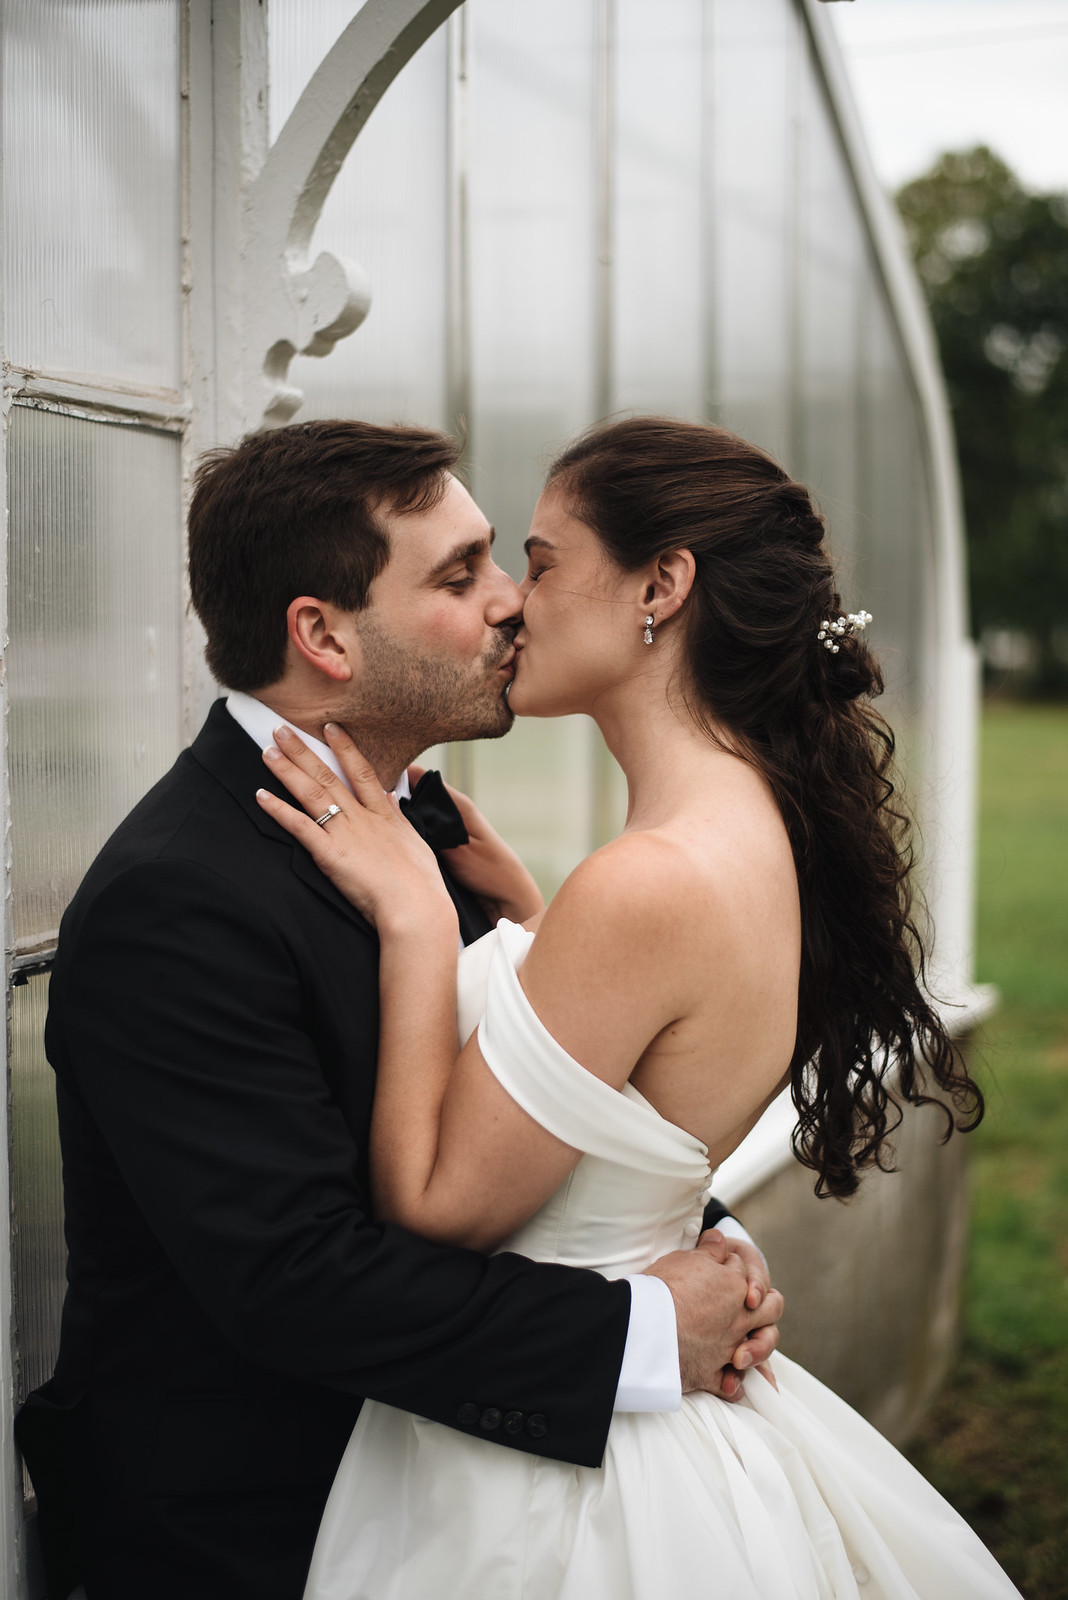 Bride and groom greenhouse kiss on juliettelauraphotography.blogspot.com